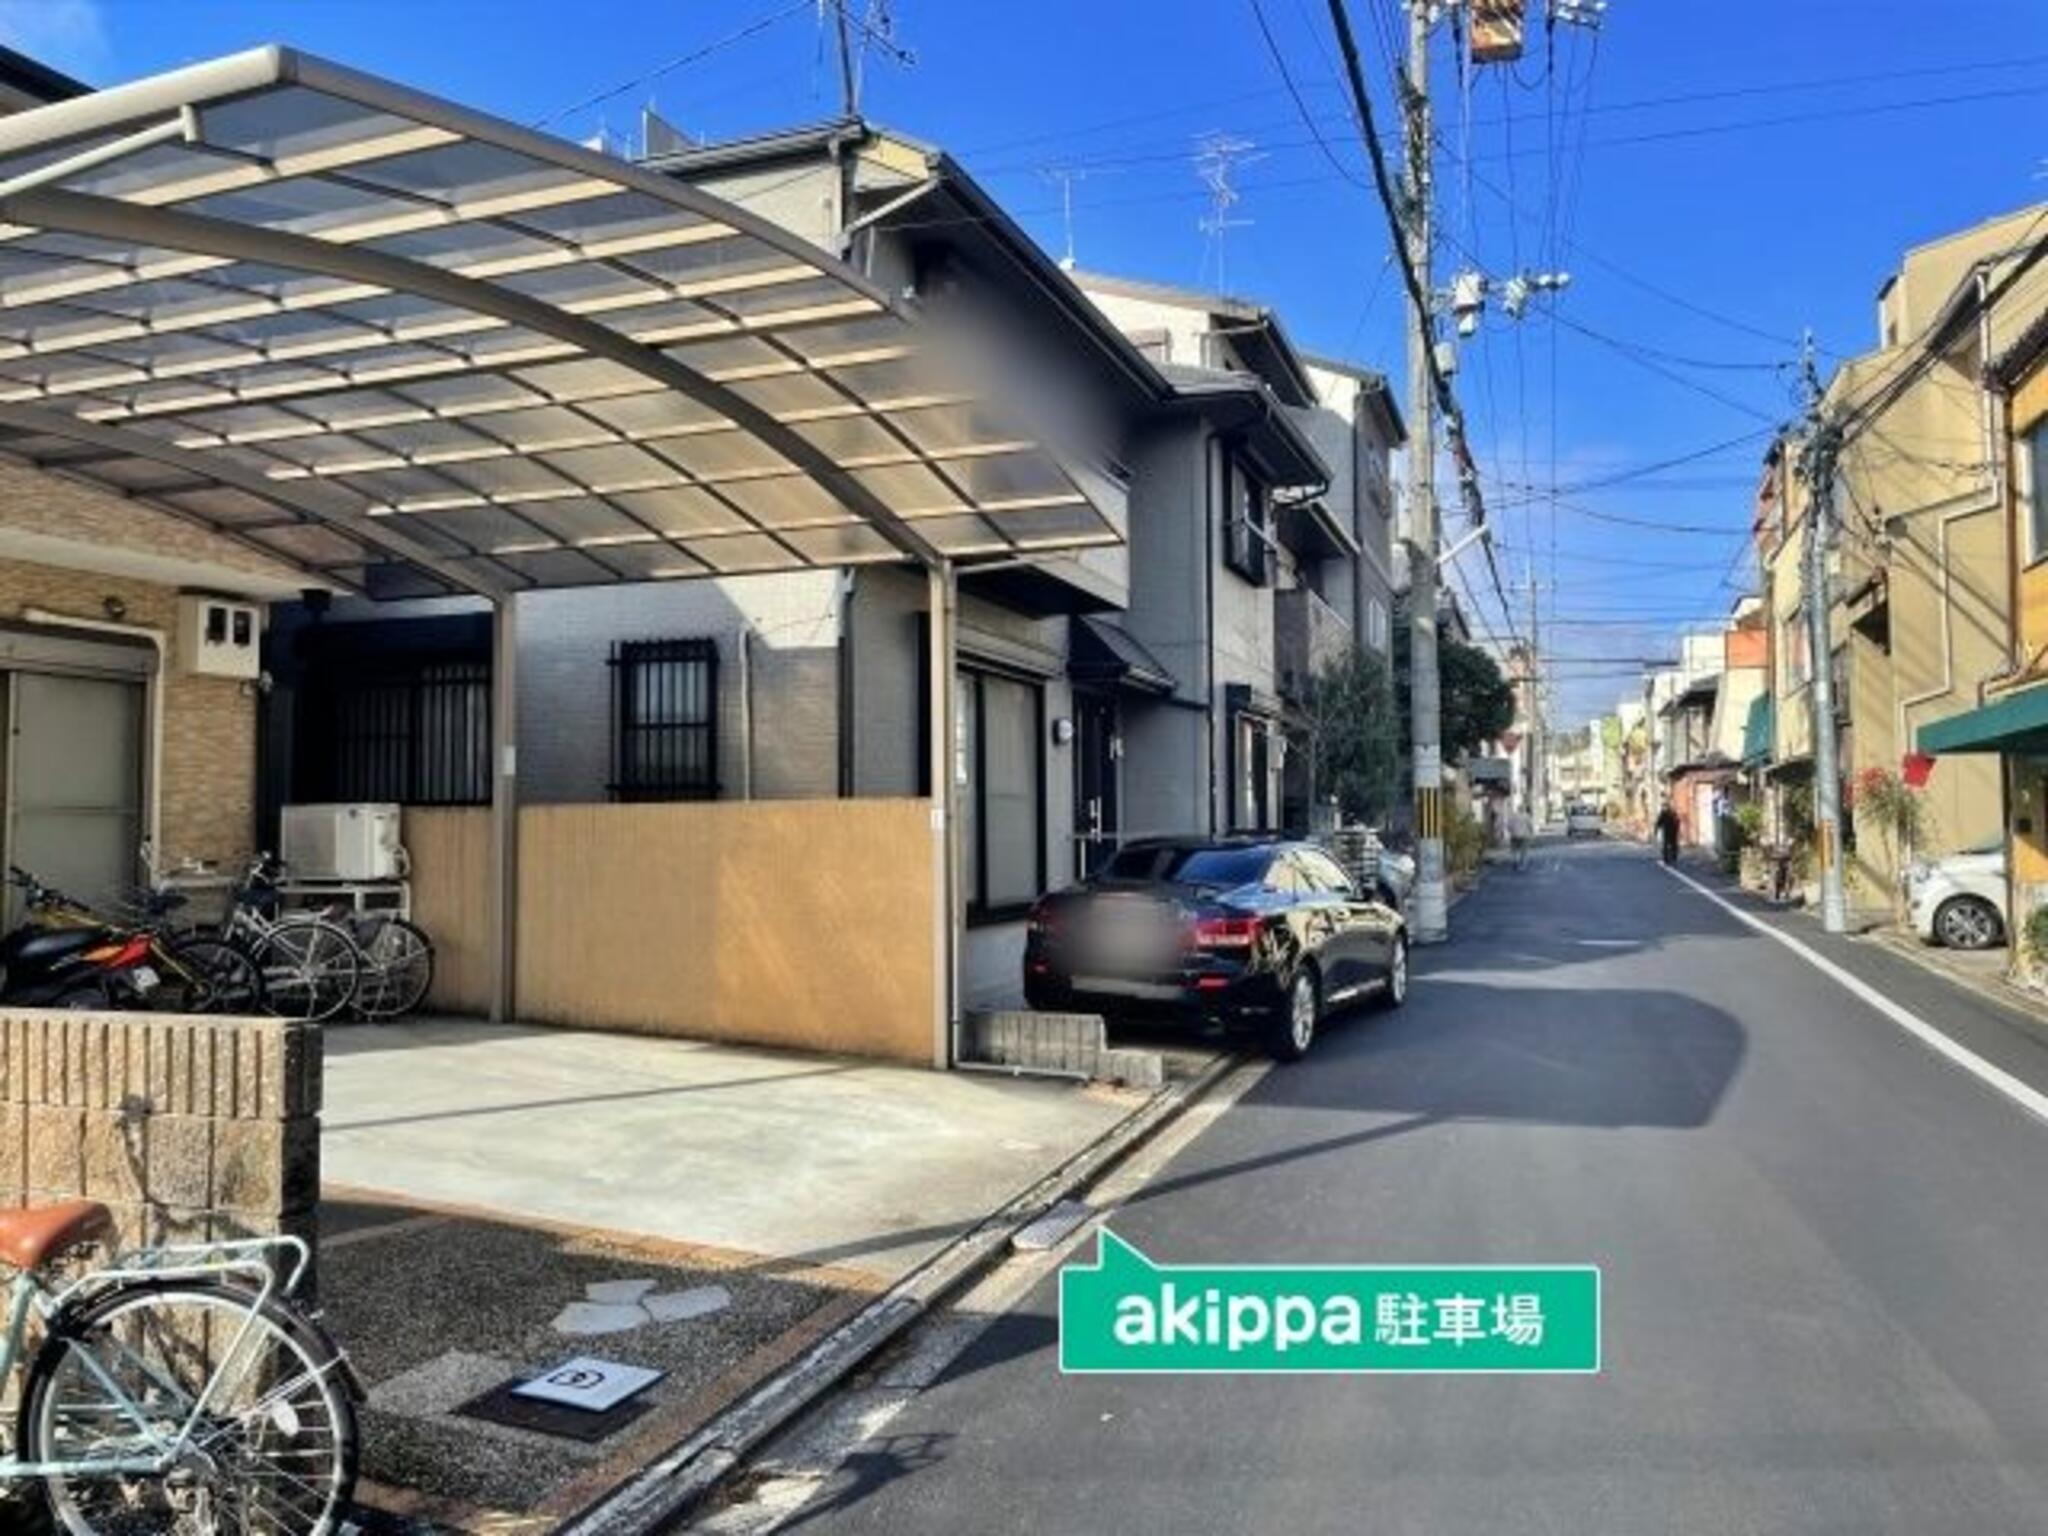 akippa駐車場:京都府京都市上京区西町97の代表写真1